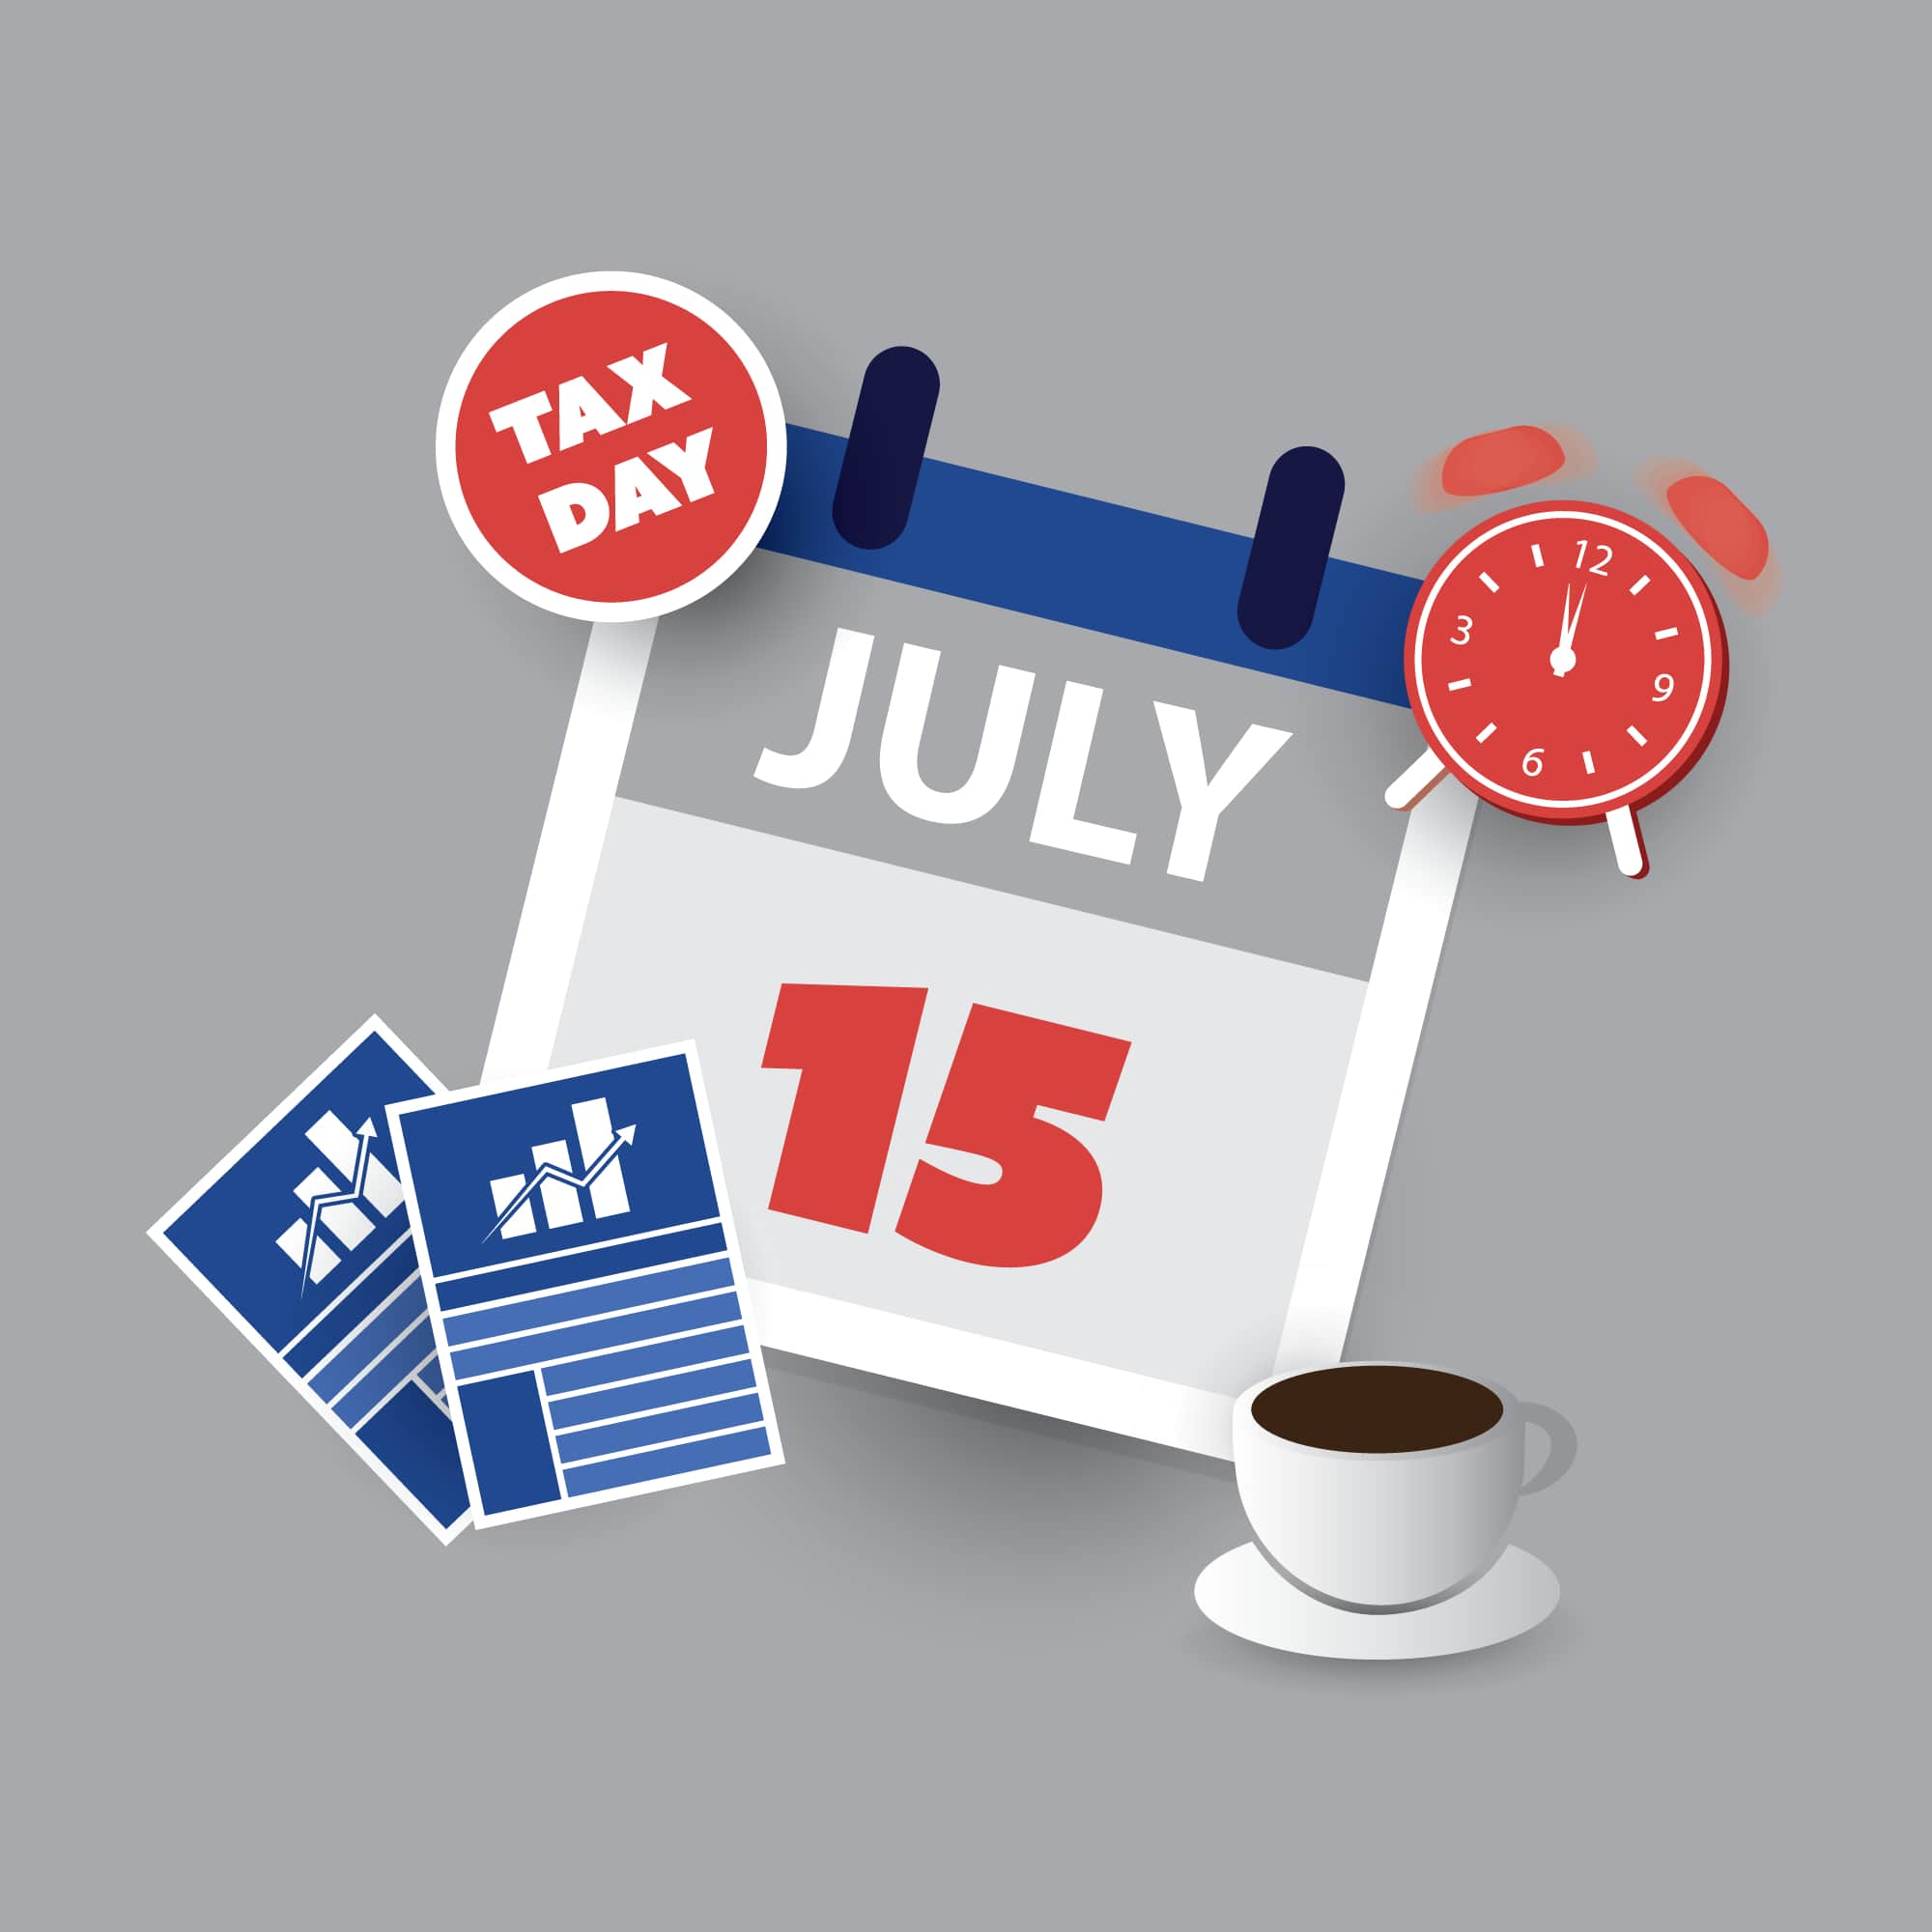 tax day july 15th